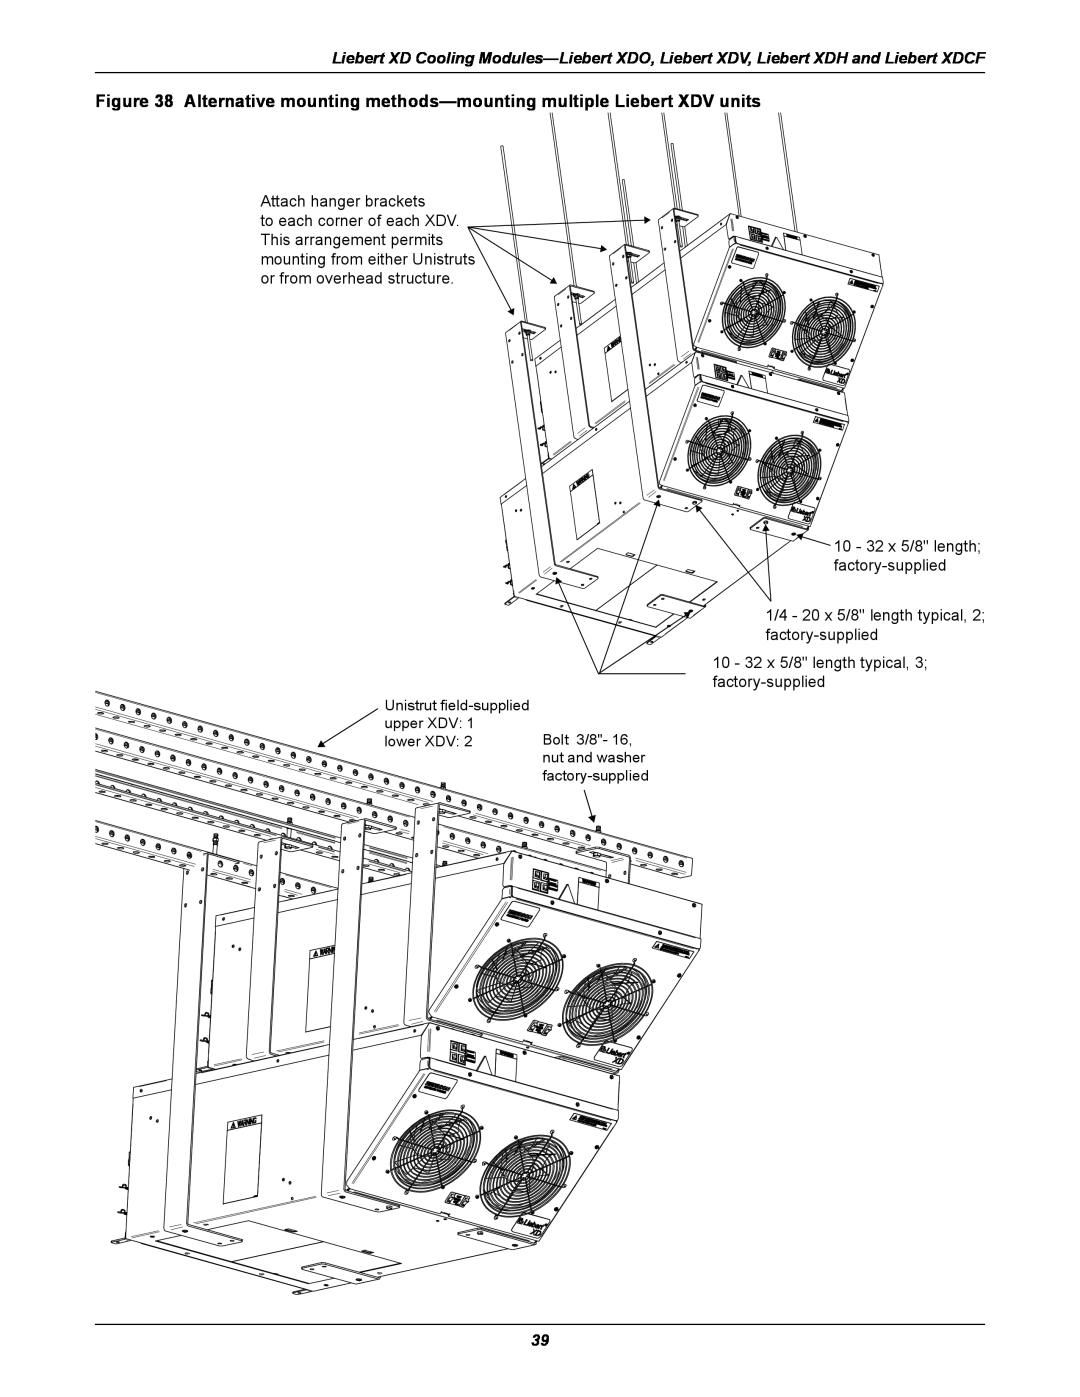 Emerson Xtreme Density manual Attach hanger brackets 